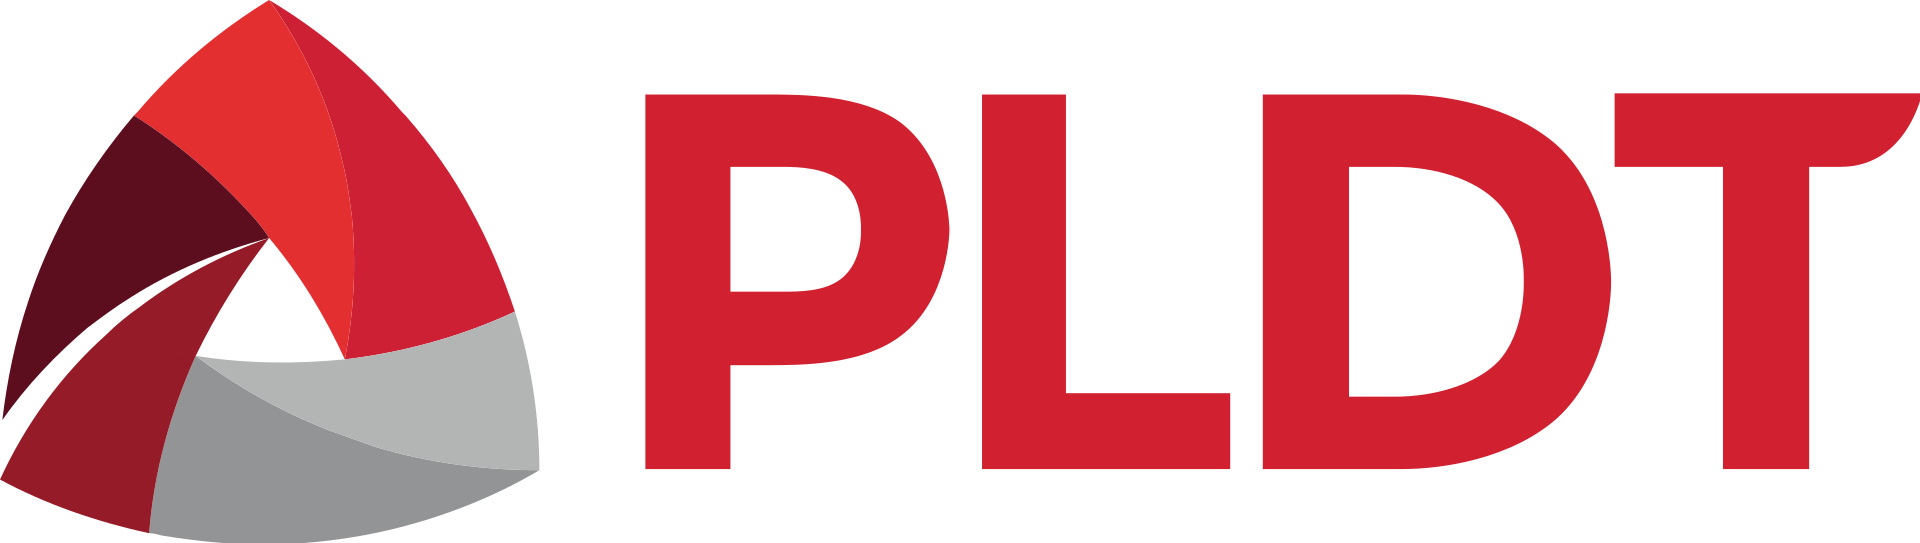 PLDT - Philippine Long Distance Telephone